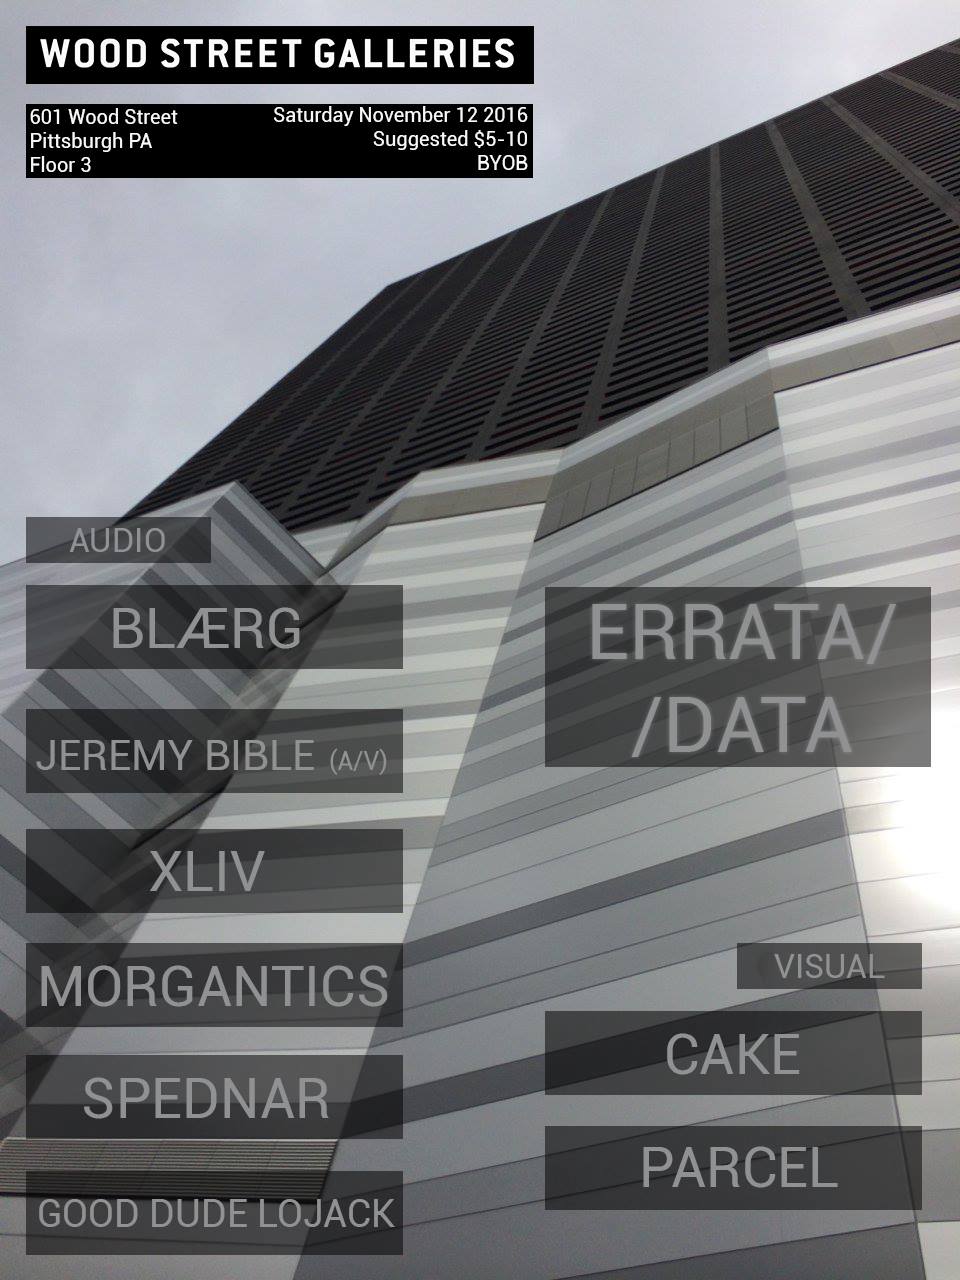 Errata//Data – Live Coding in Pittsburgh